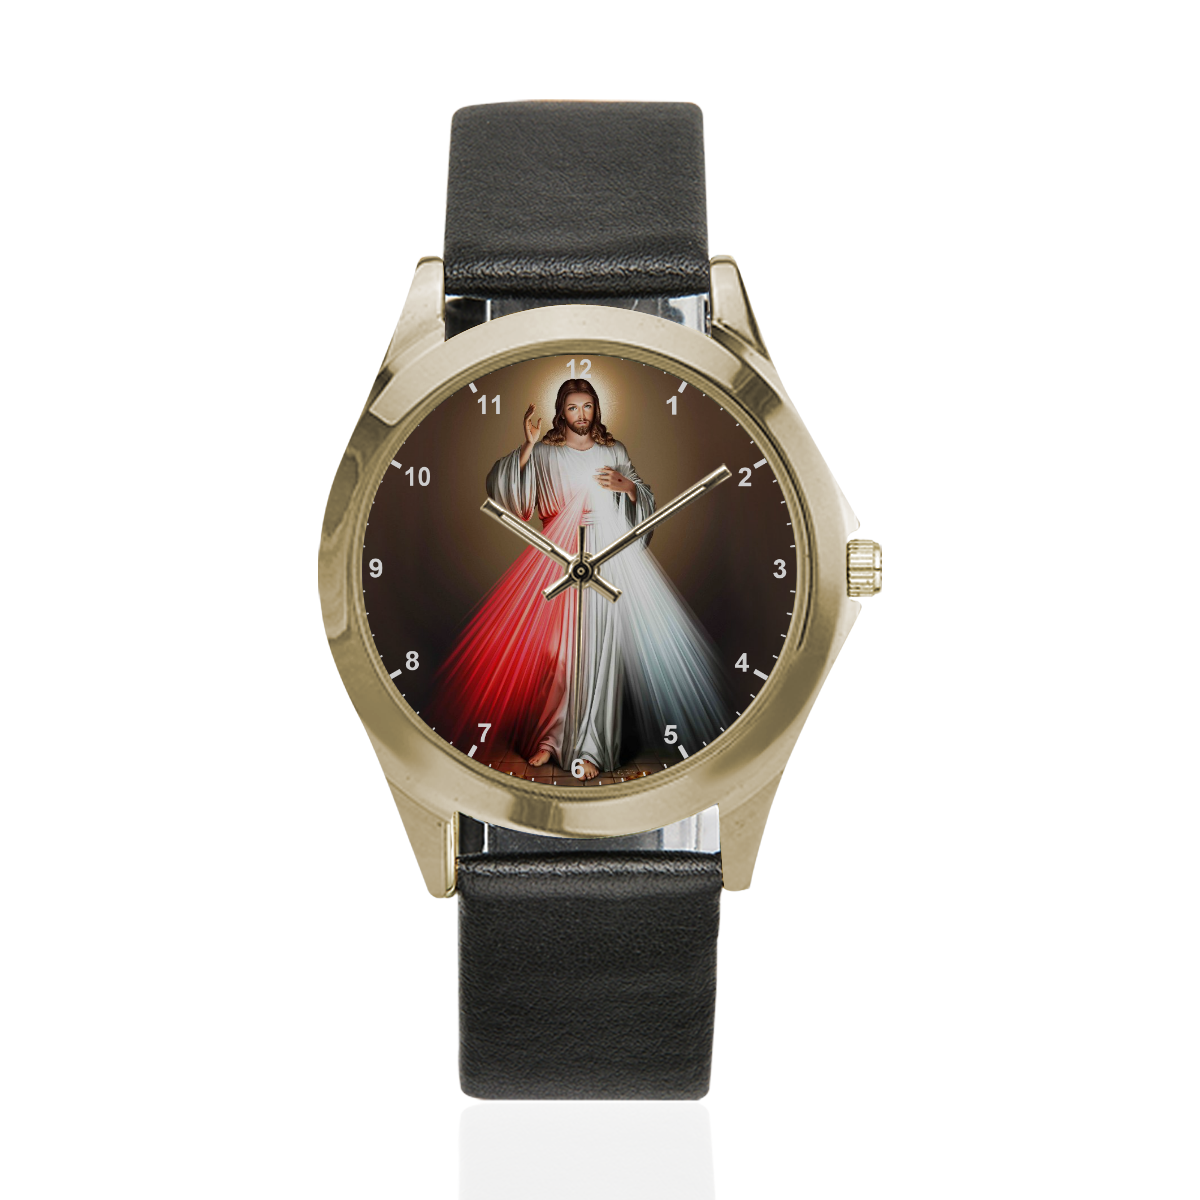 Jesus Christ Unisex Silver-Tone Round Leather Watch (Model 216)